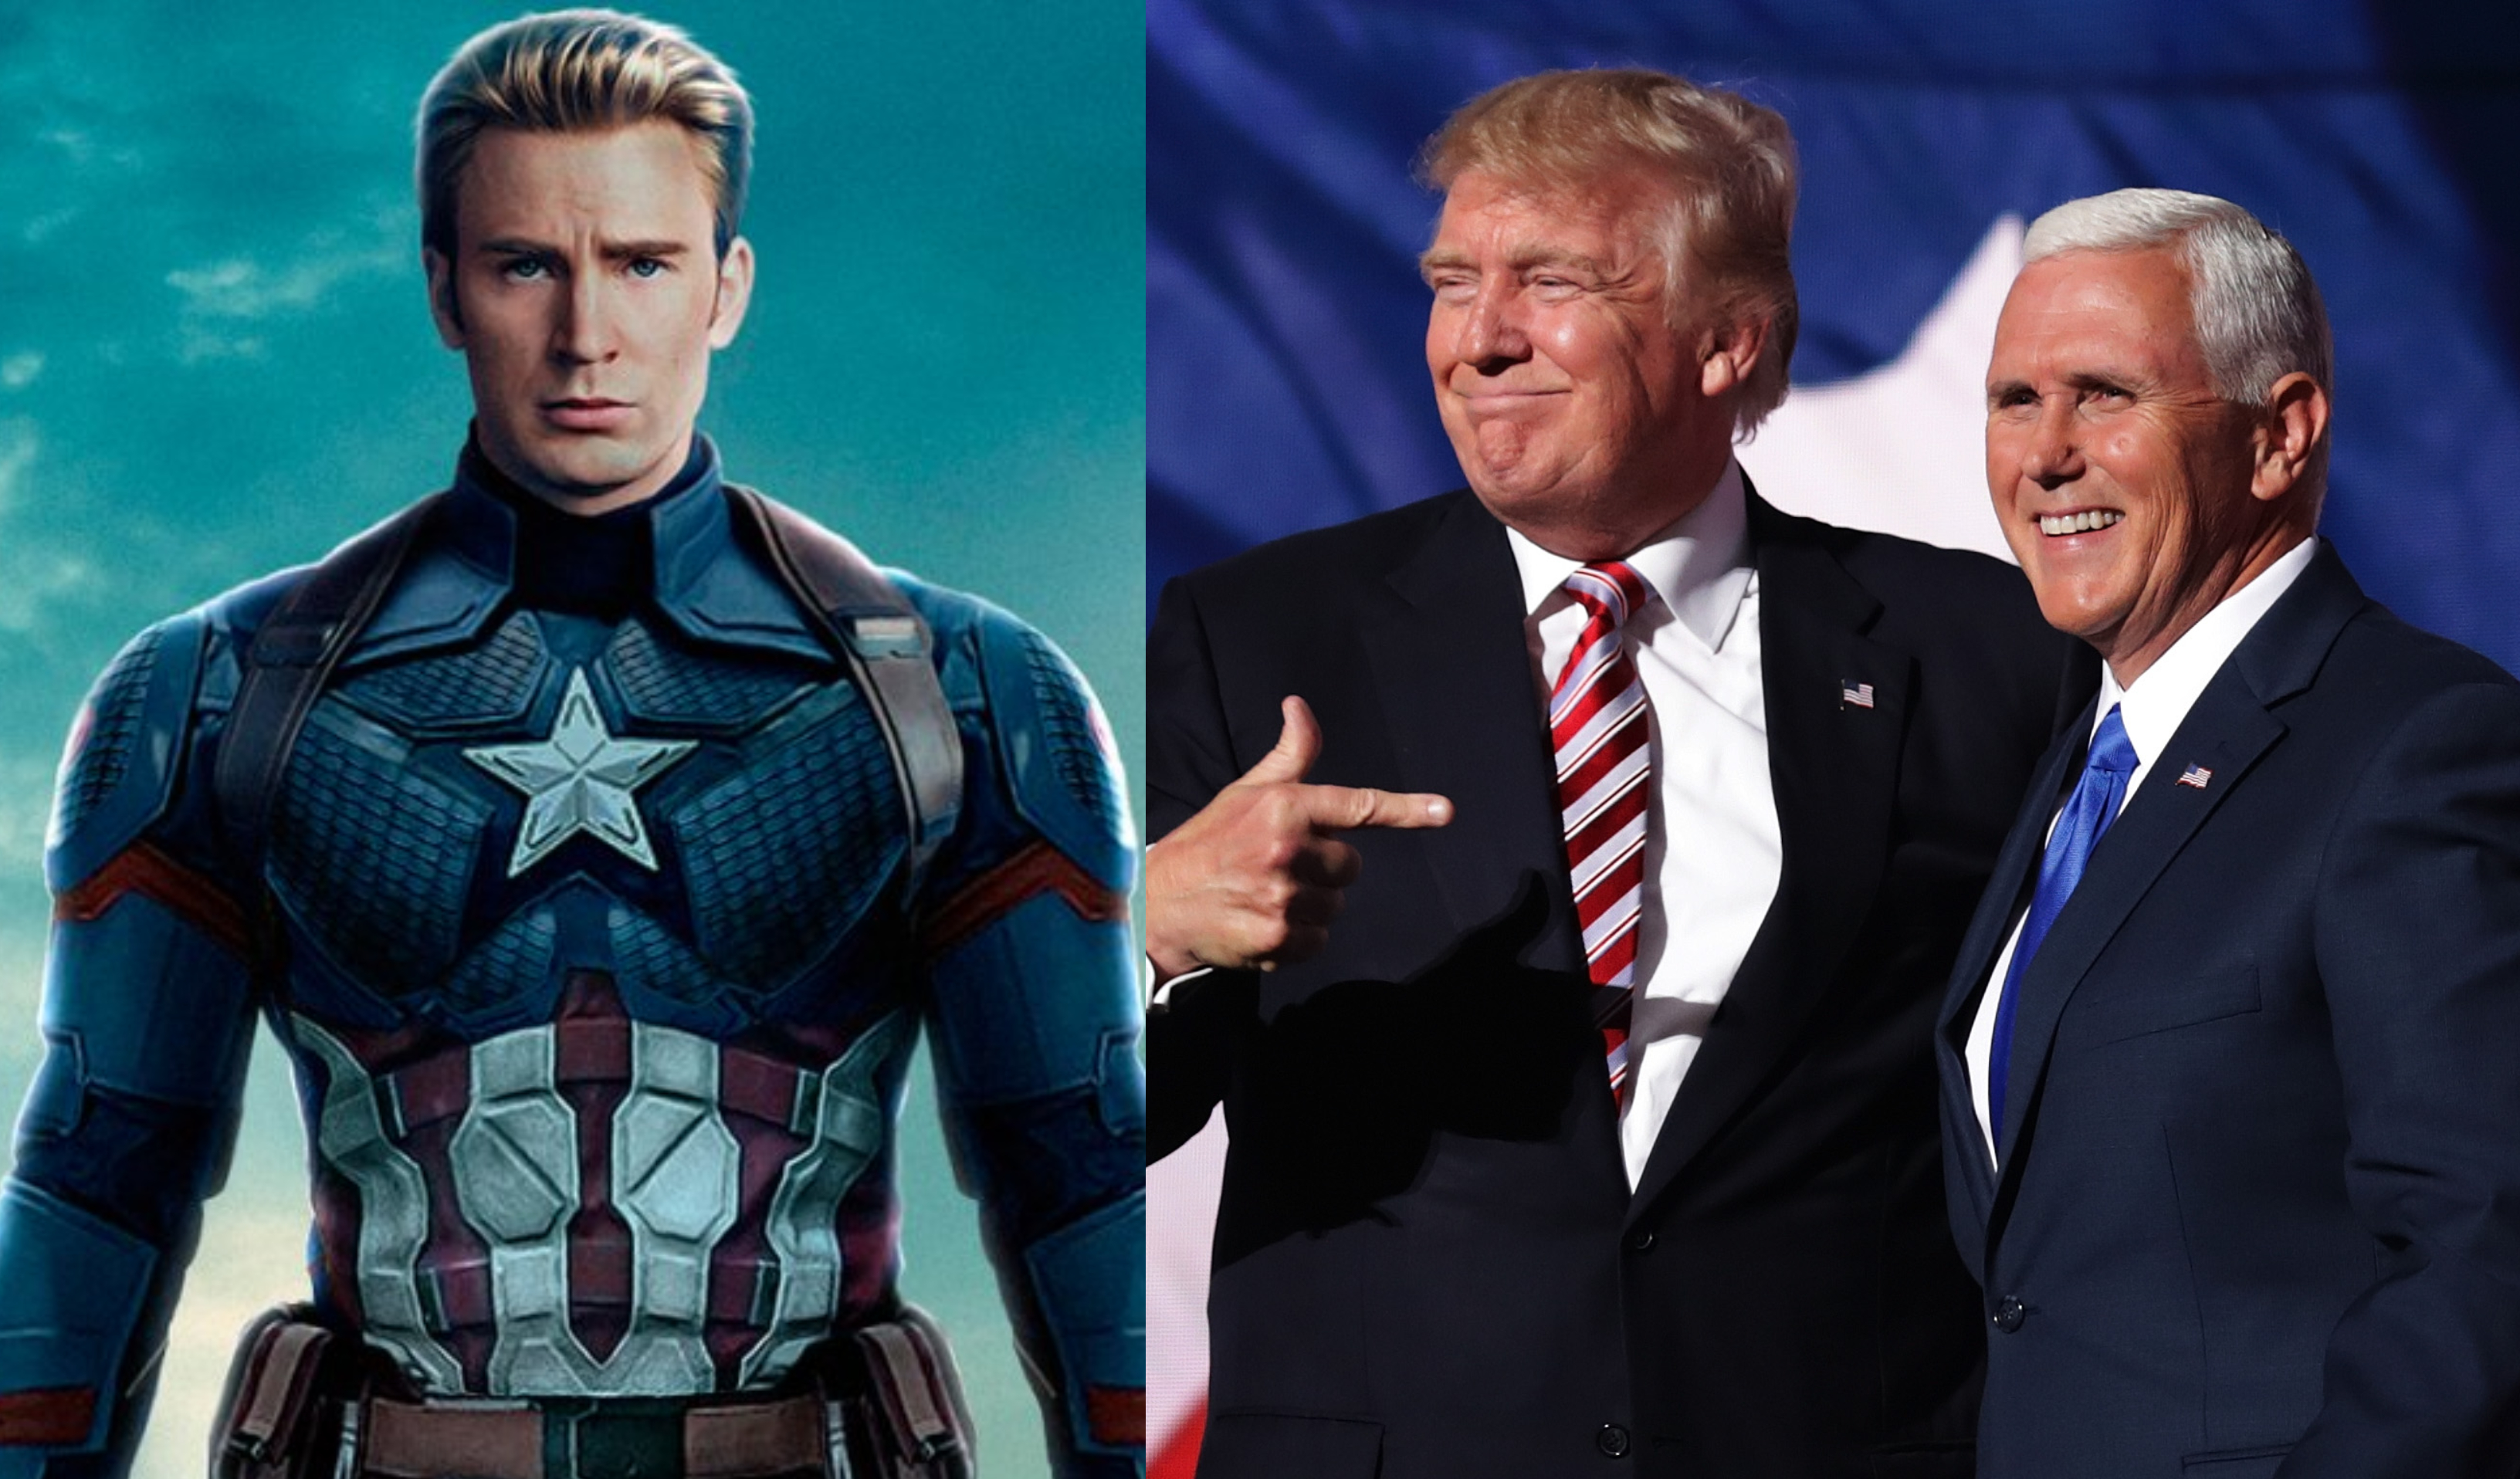 Protagonista de Capitán América llamó “gusano” a vicepresidente de EE.UU.